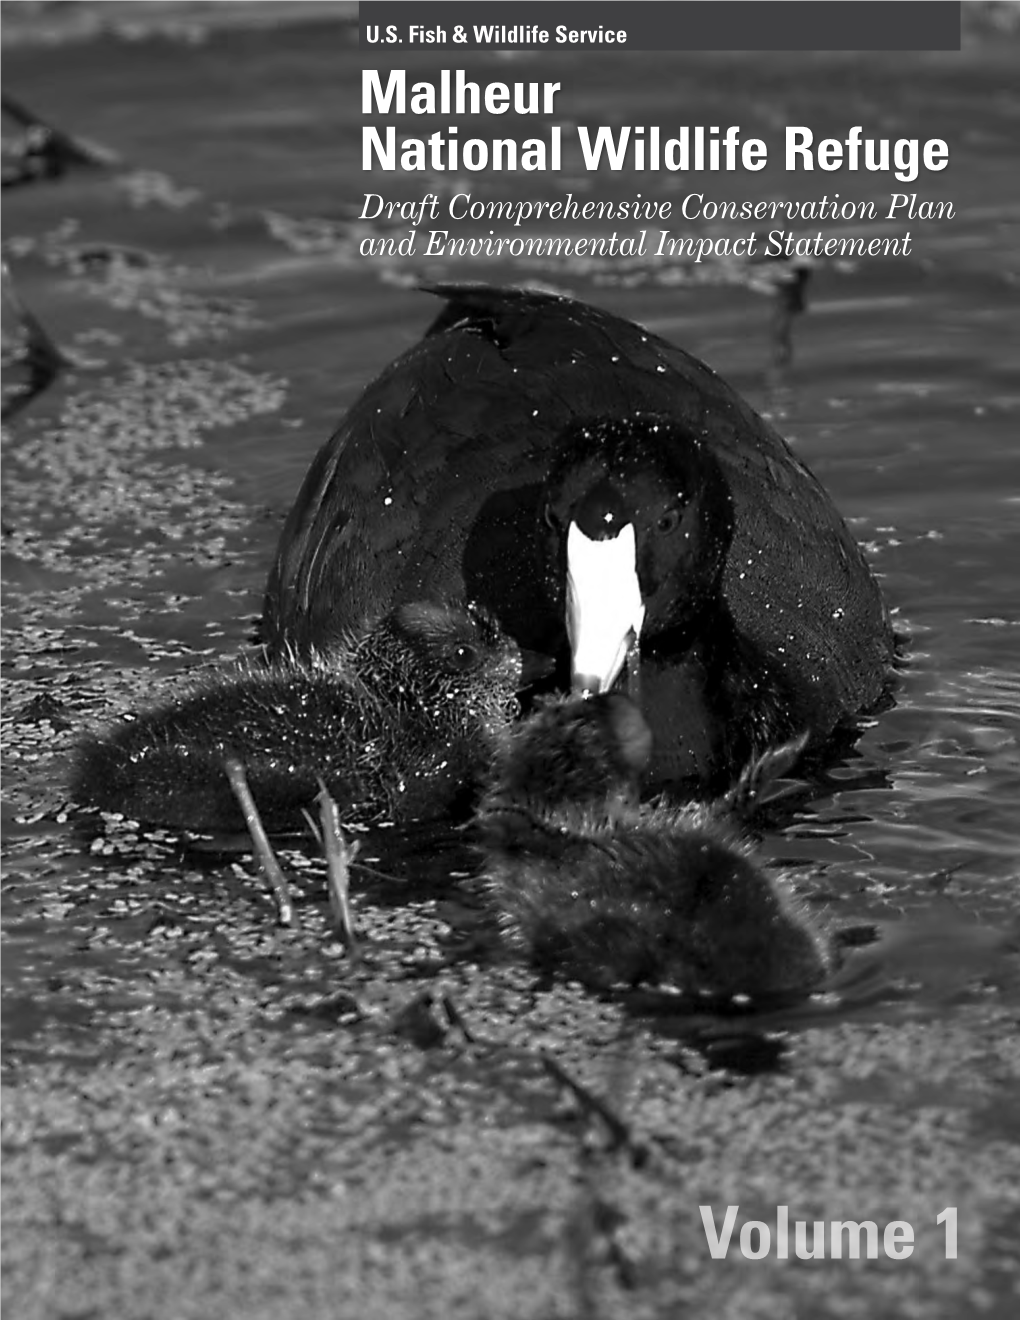 1.2 the Significance of Malheur National Wildlife Refuge